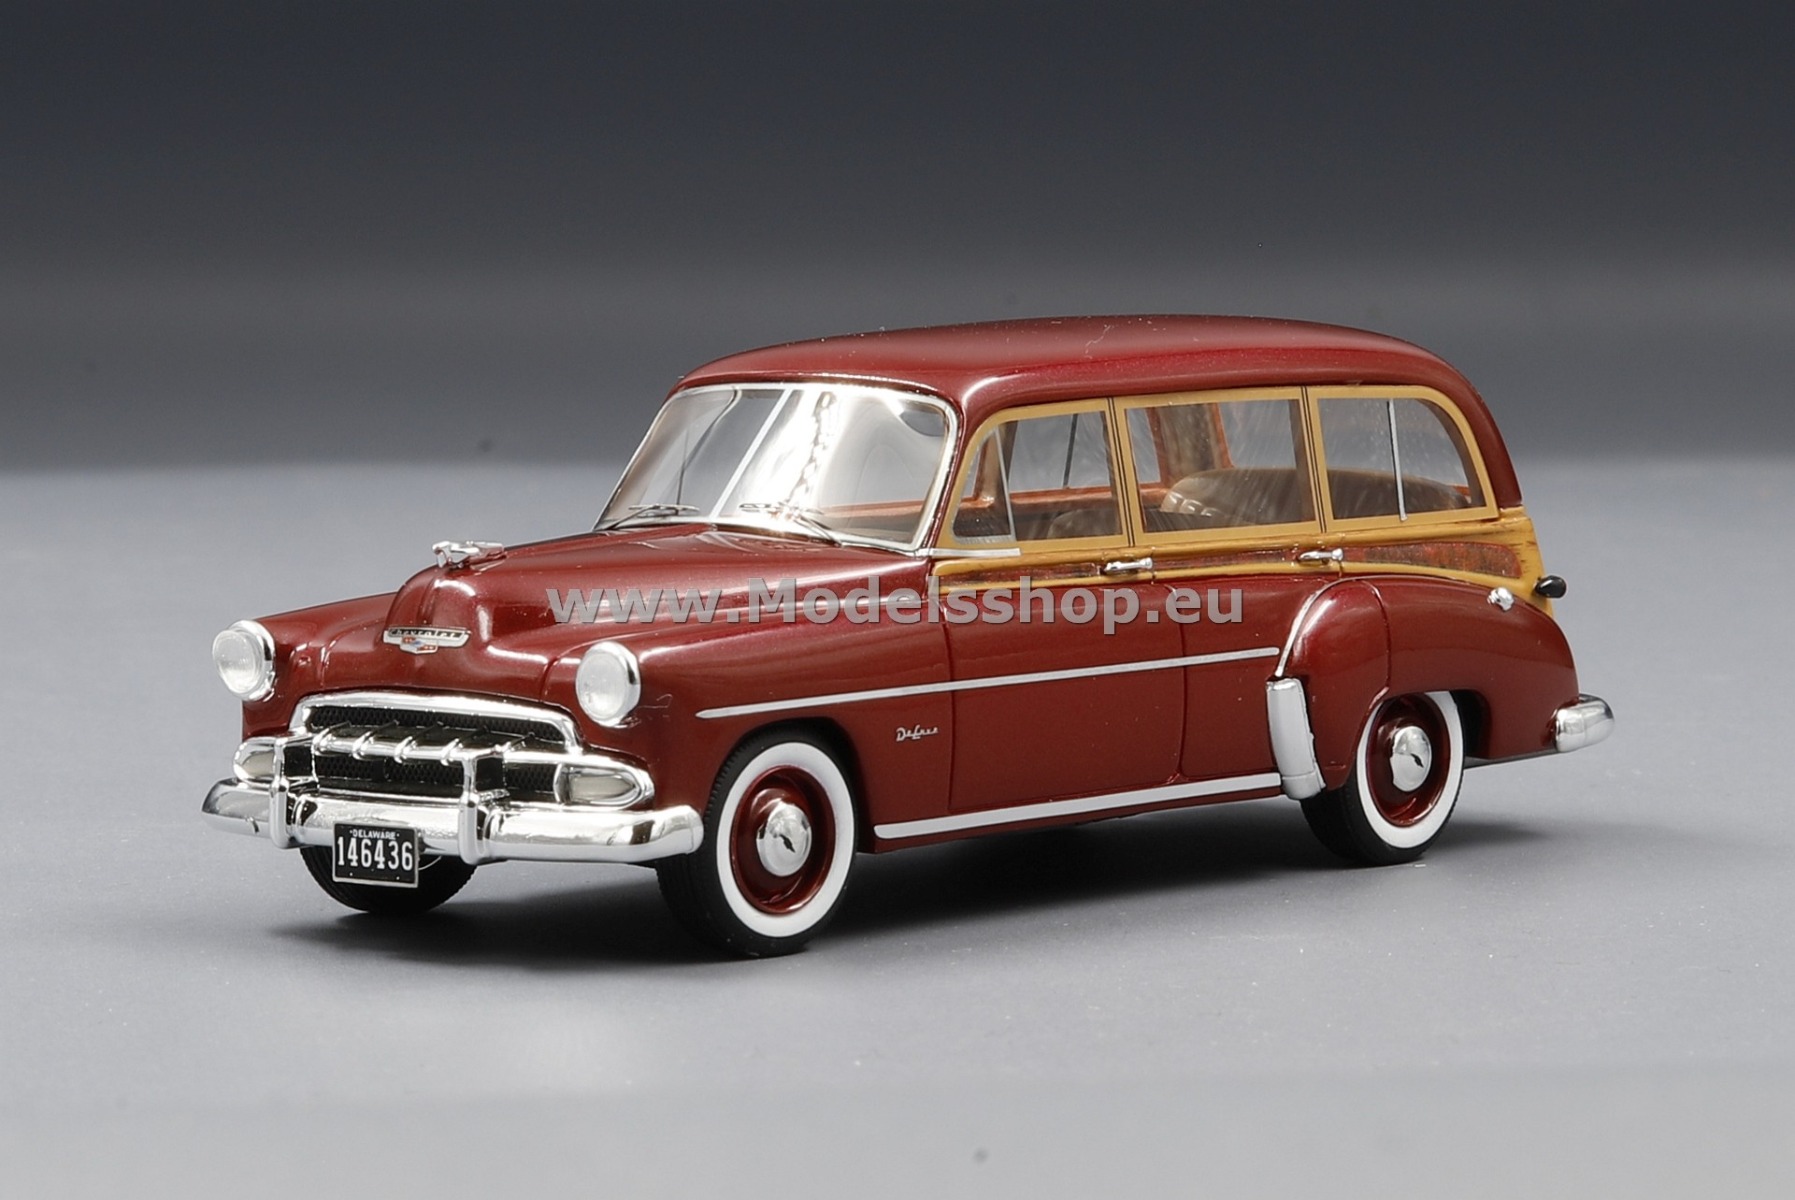 NEO 46436 Chevrolet Styleline Deluxe Station Wagon, 1952 /red metallic/